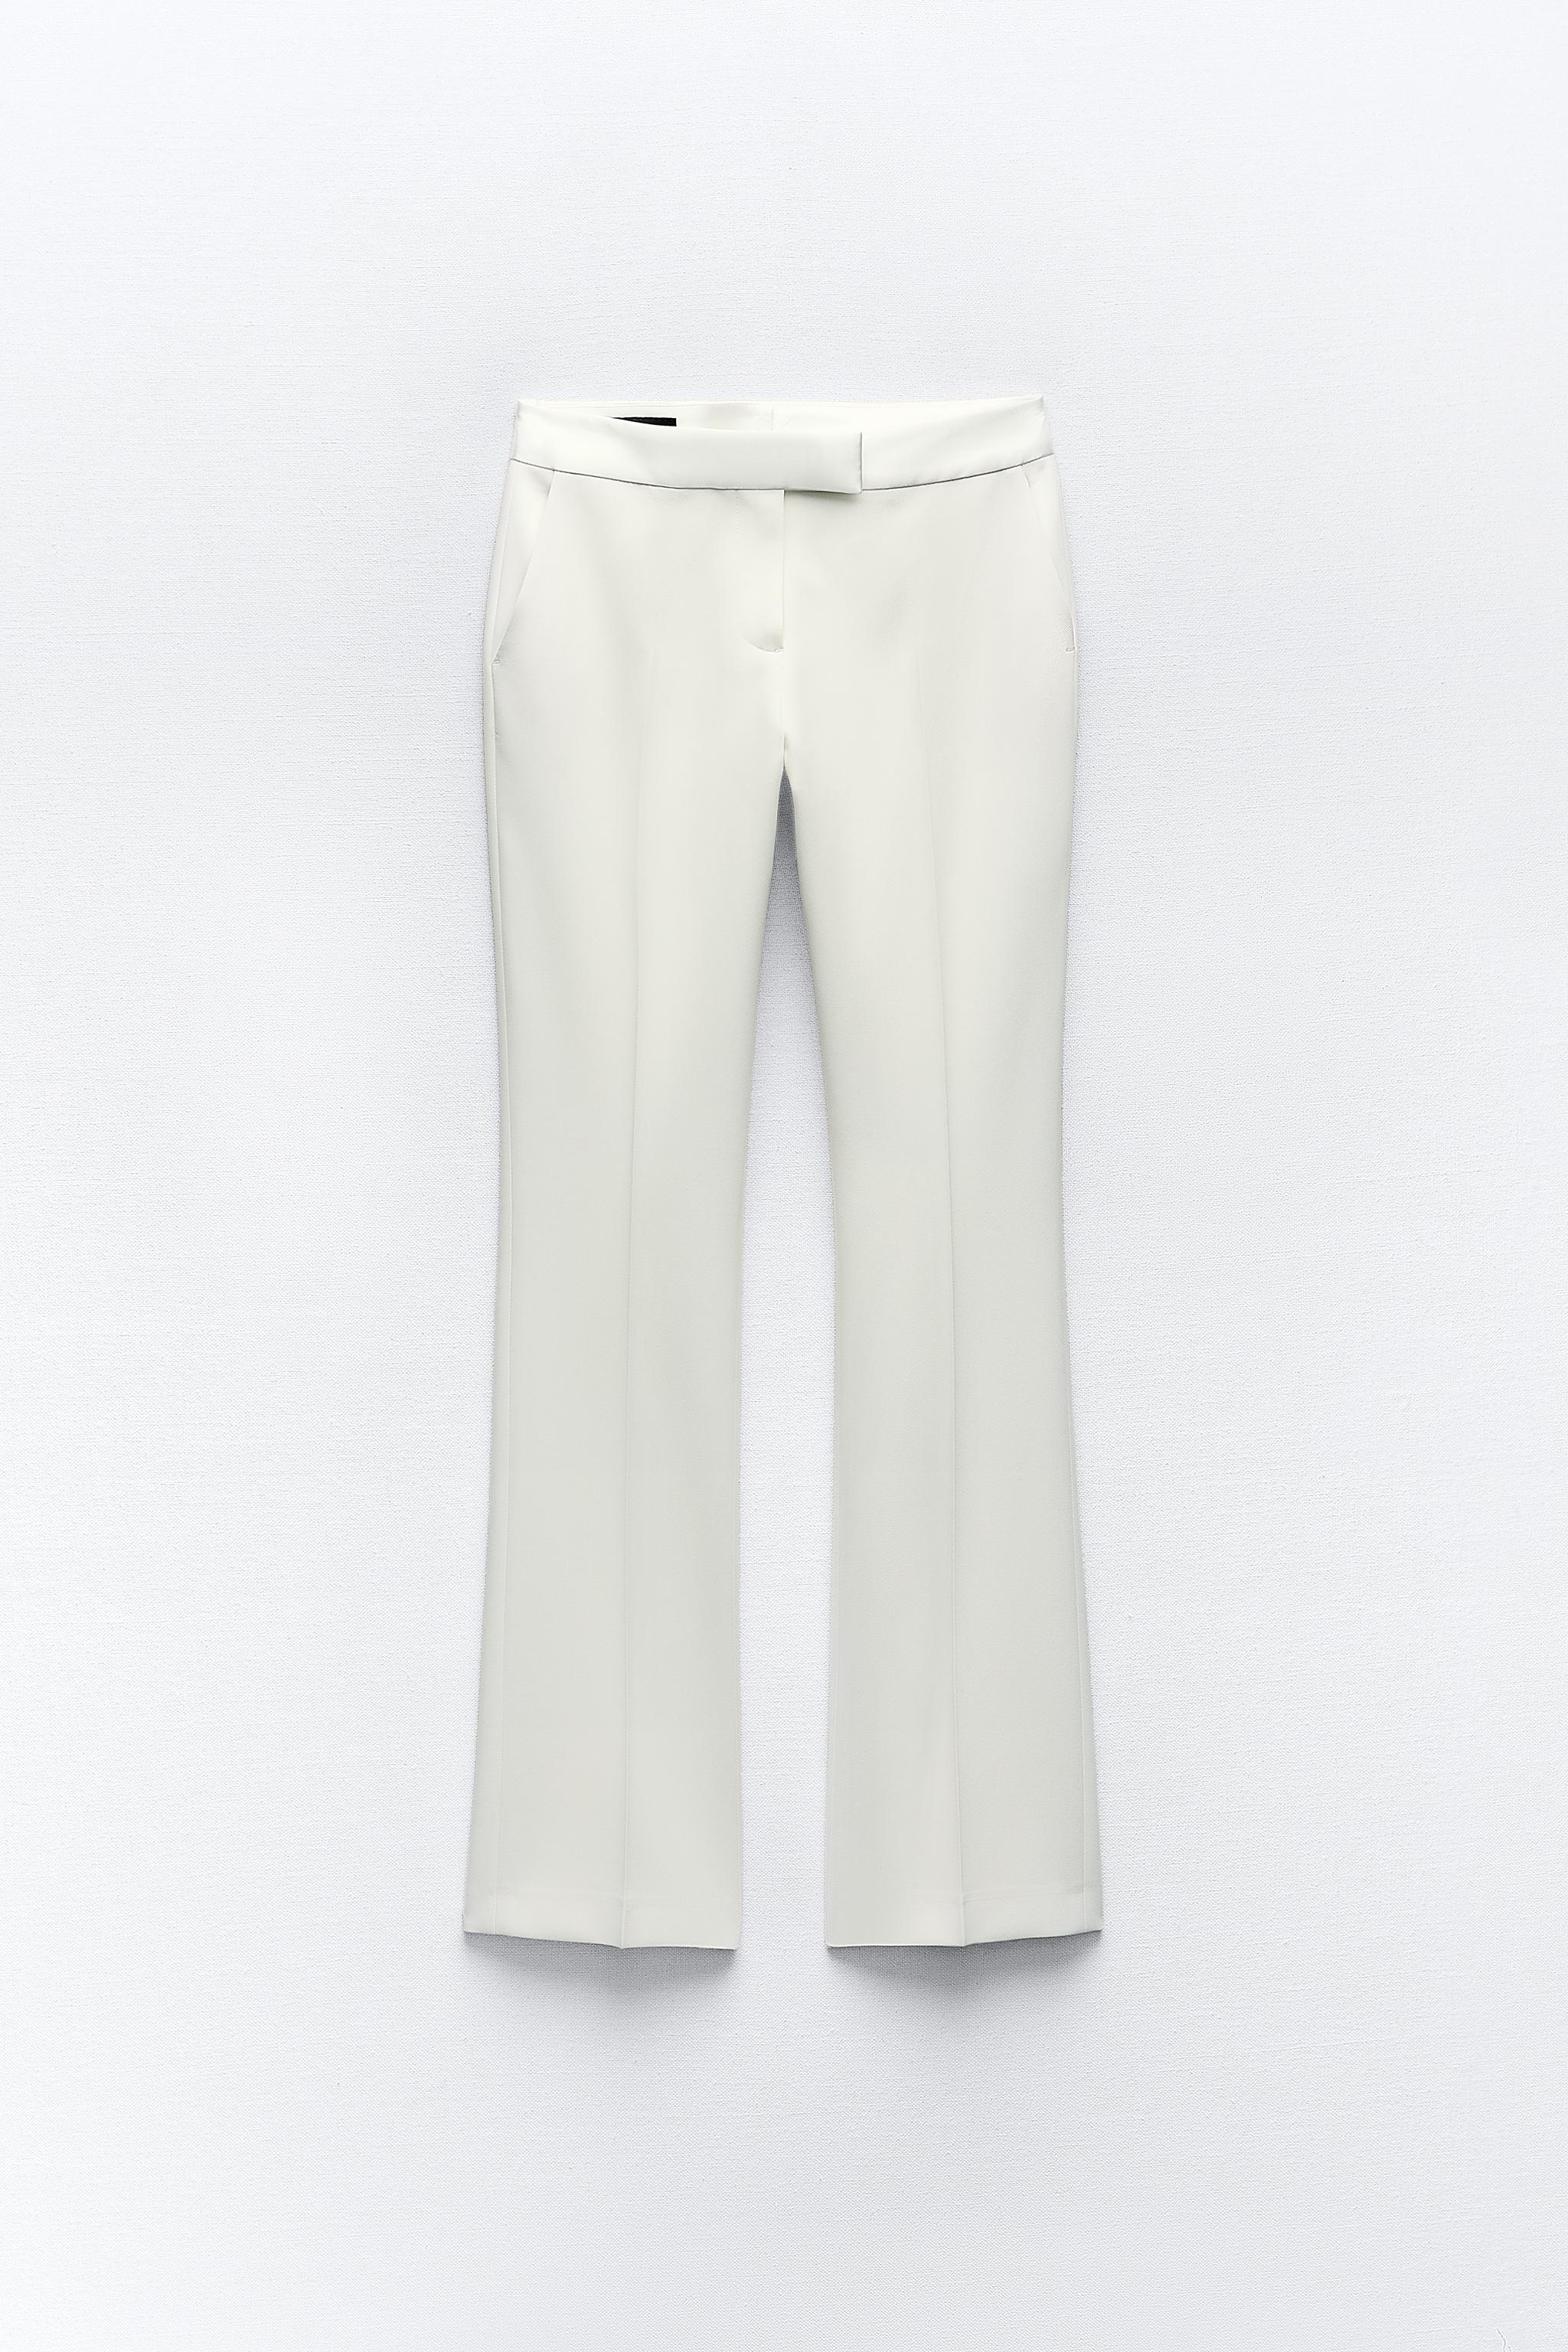 Zara Darted trouser in oyster white, Women's Fashion, Bottoms